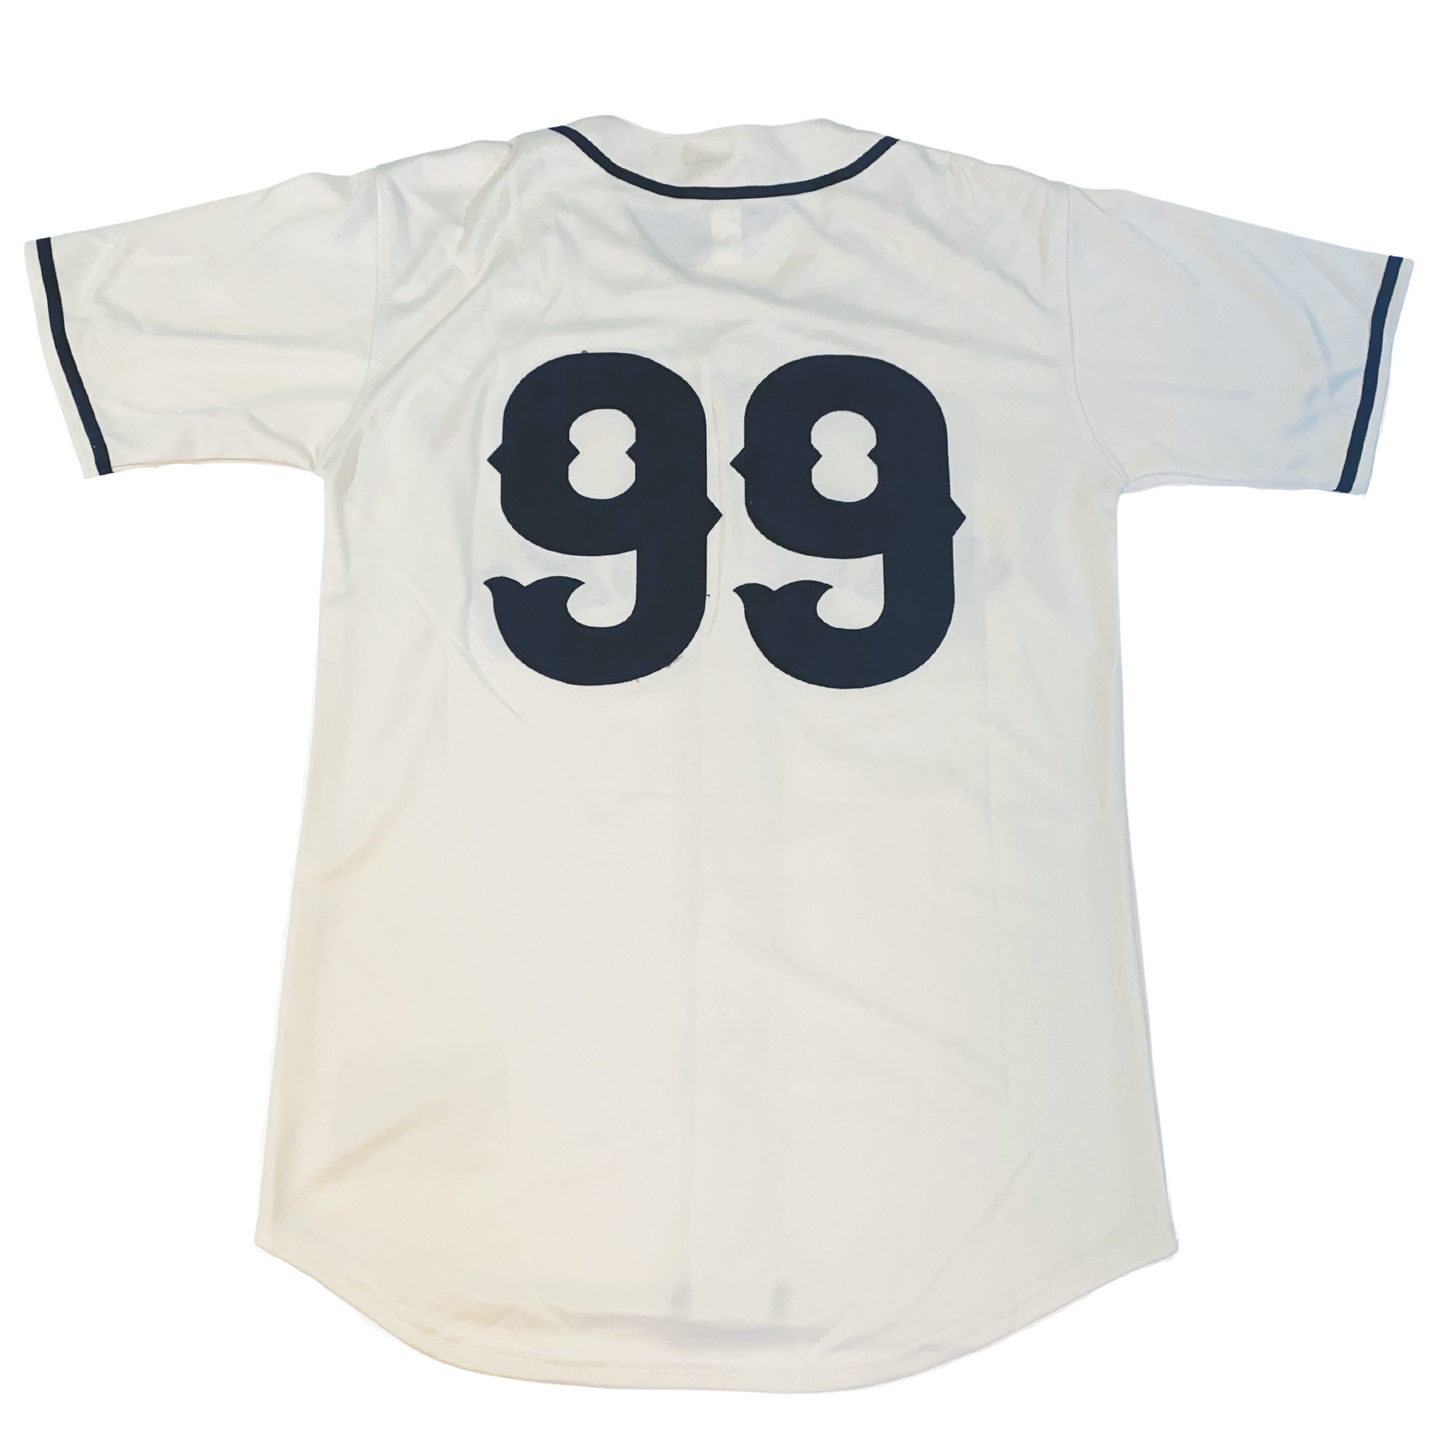 New York Black Yankees - legacy jersey – It's A Black Thang.com